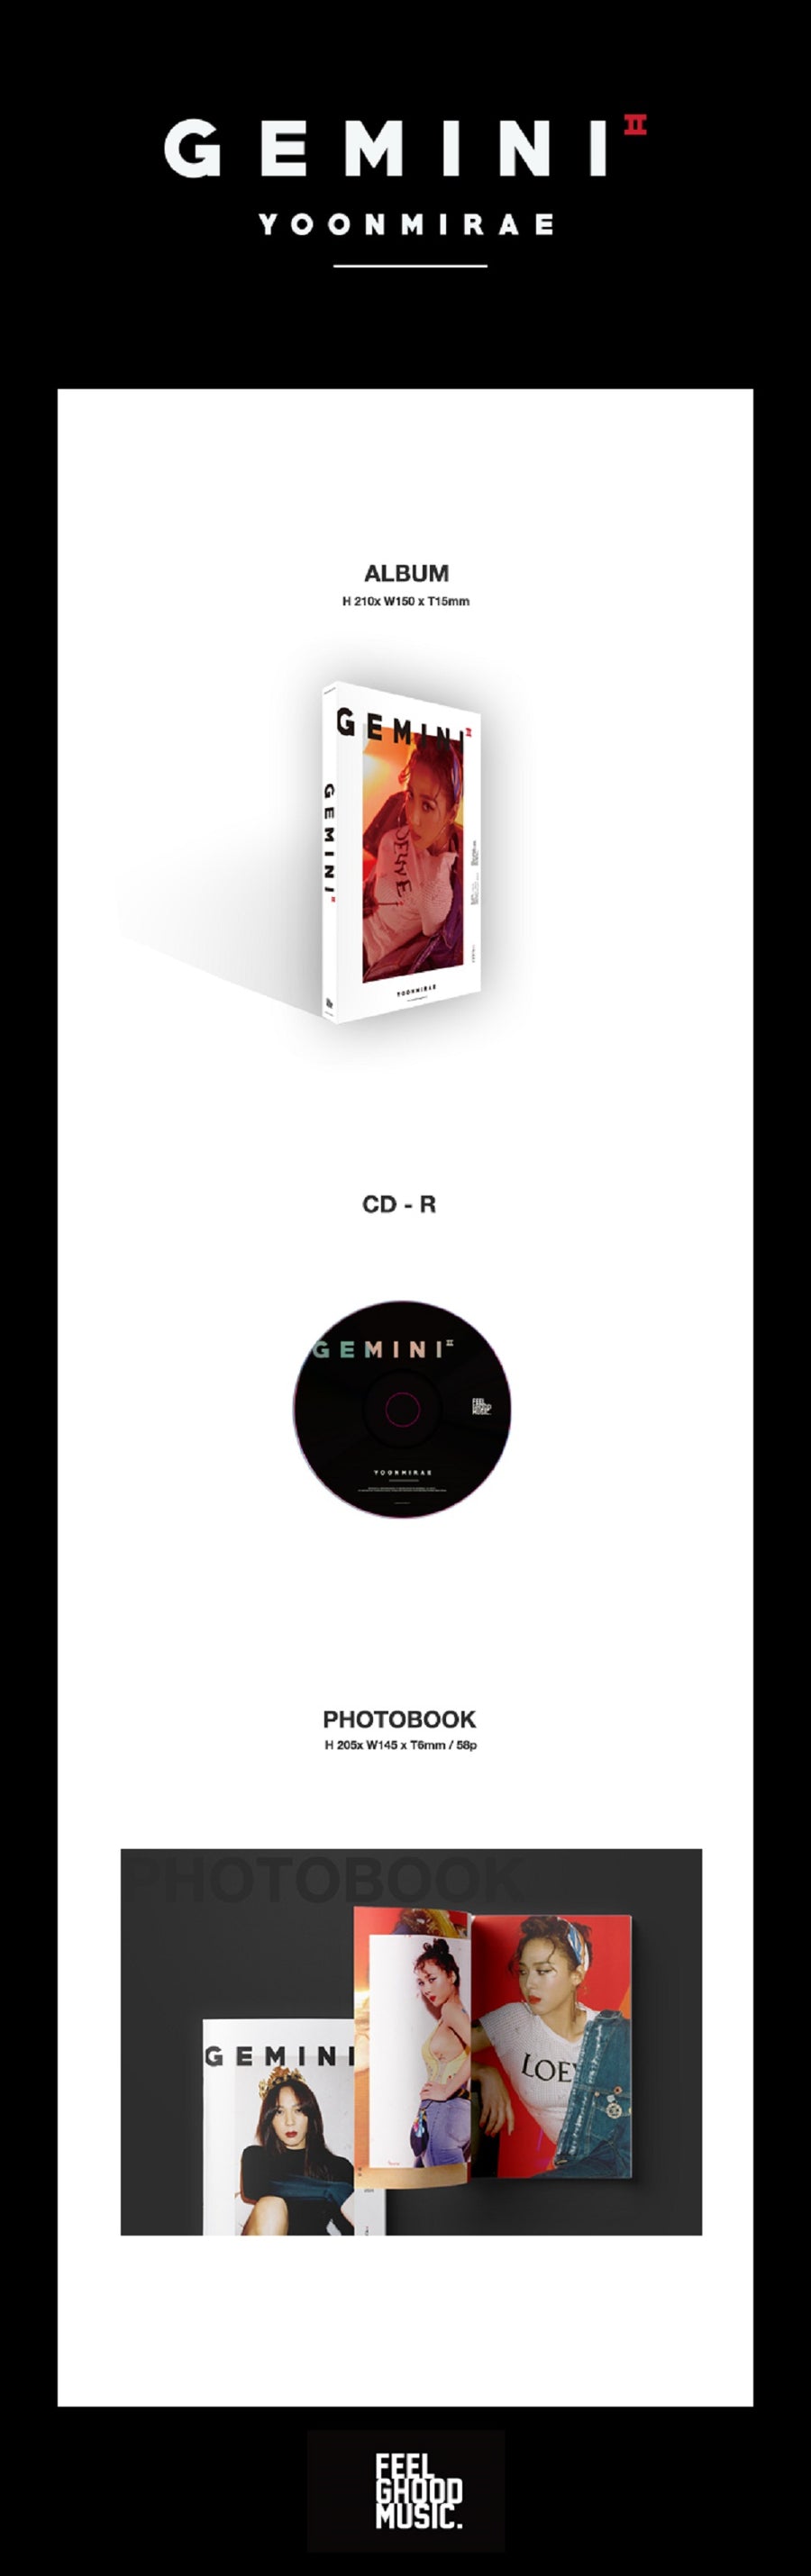 Yoon Mi Rae 4th Album - Gemini2